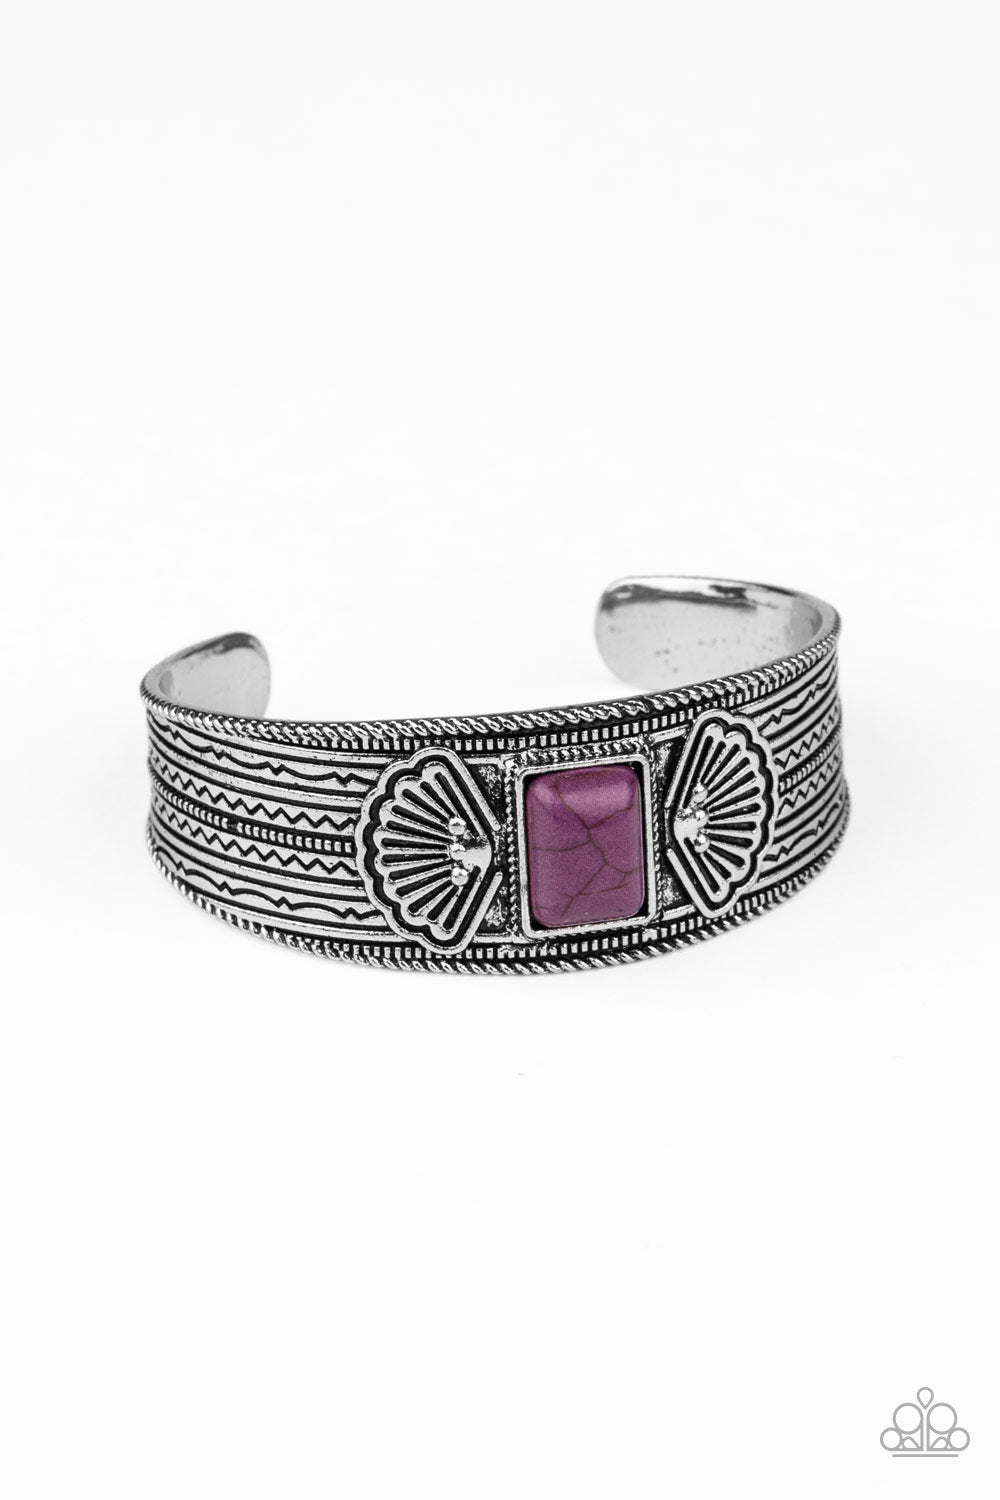 Paparazzi Accessories - Ocean Mist - Purple Bracelet - Alies Bling Bar